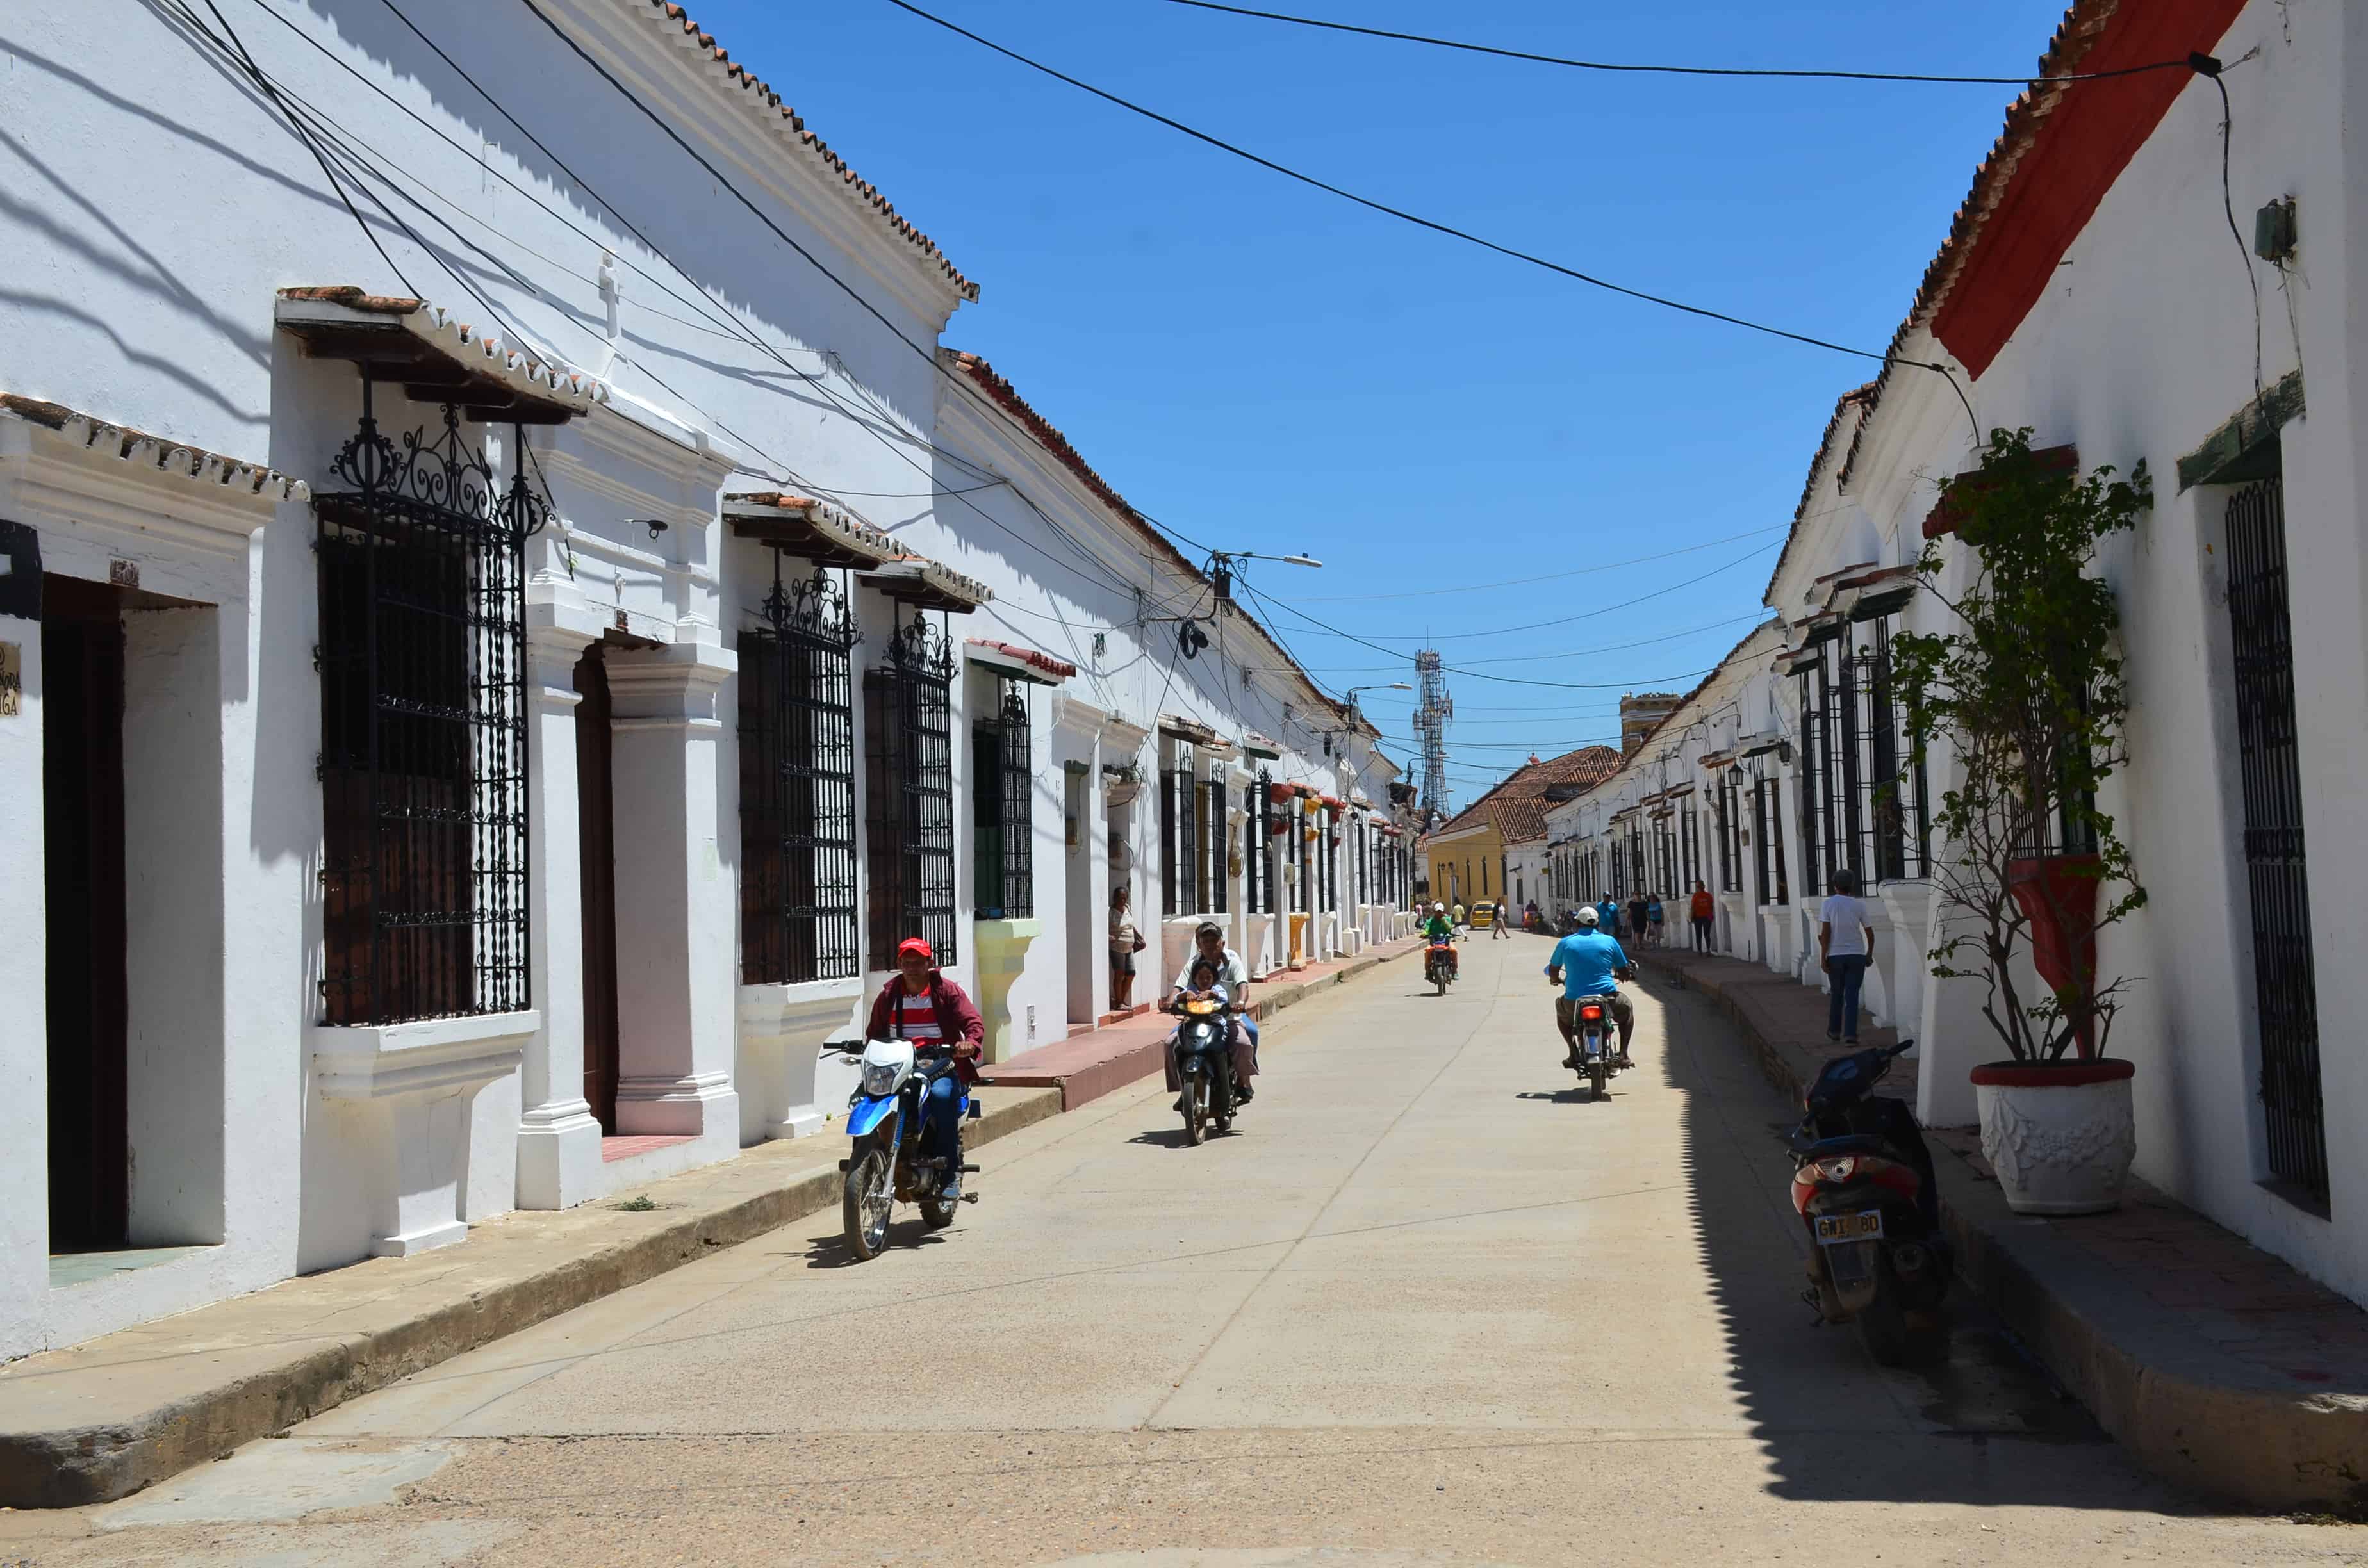 Calle del Medio in Mompox, Bolívar, Colombia